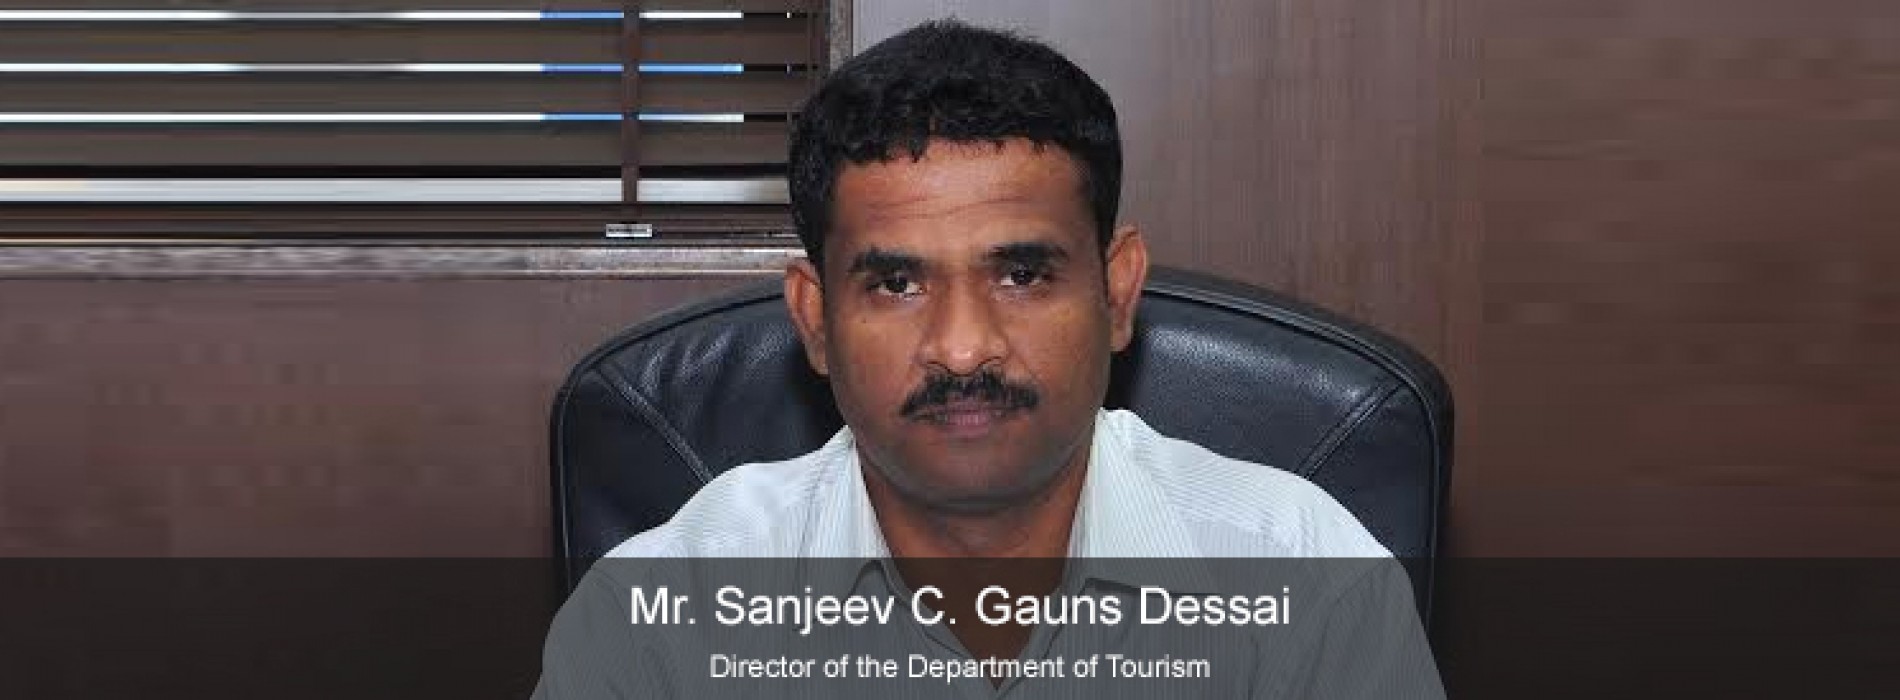 Mr. Sanjeev C. Gauns Dessai takes over as new Tourism Director of Goa